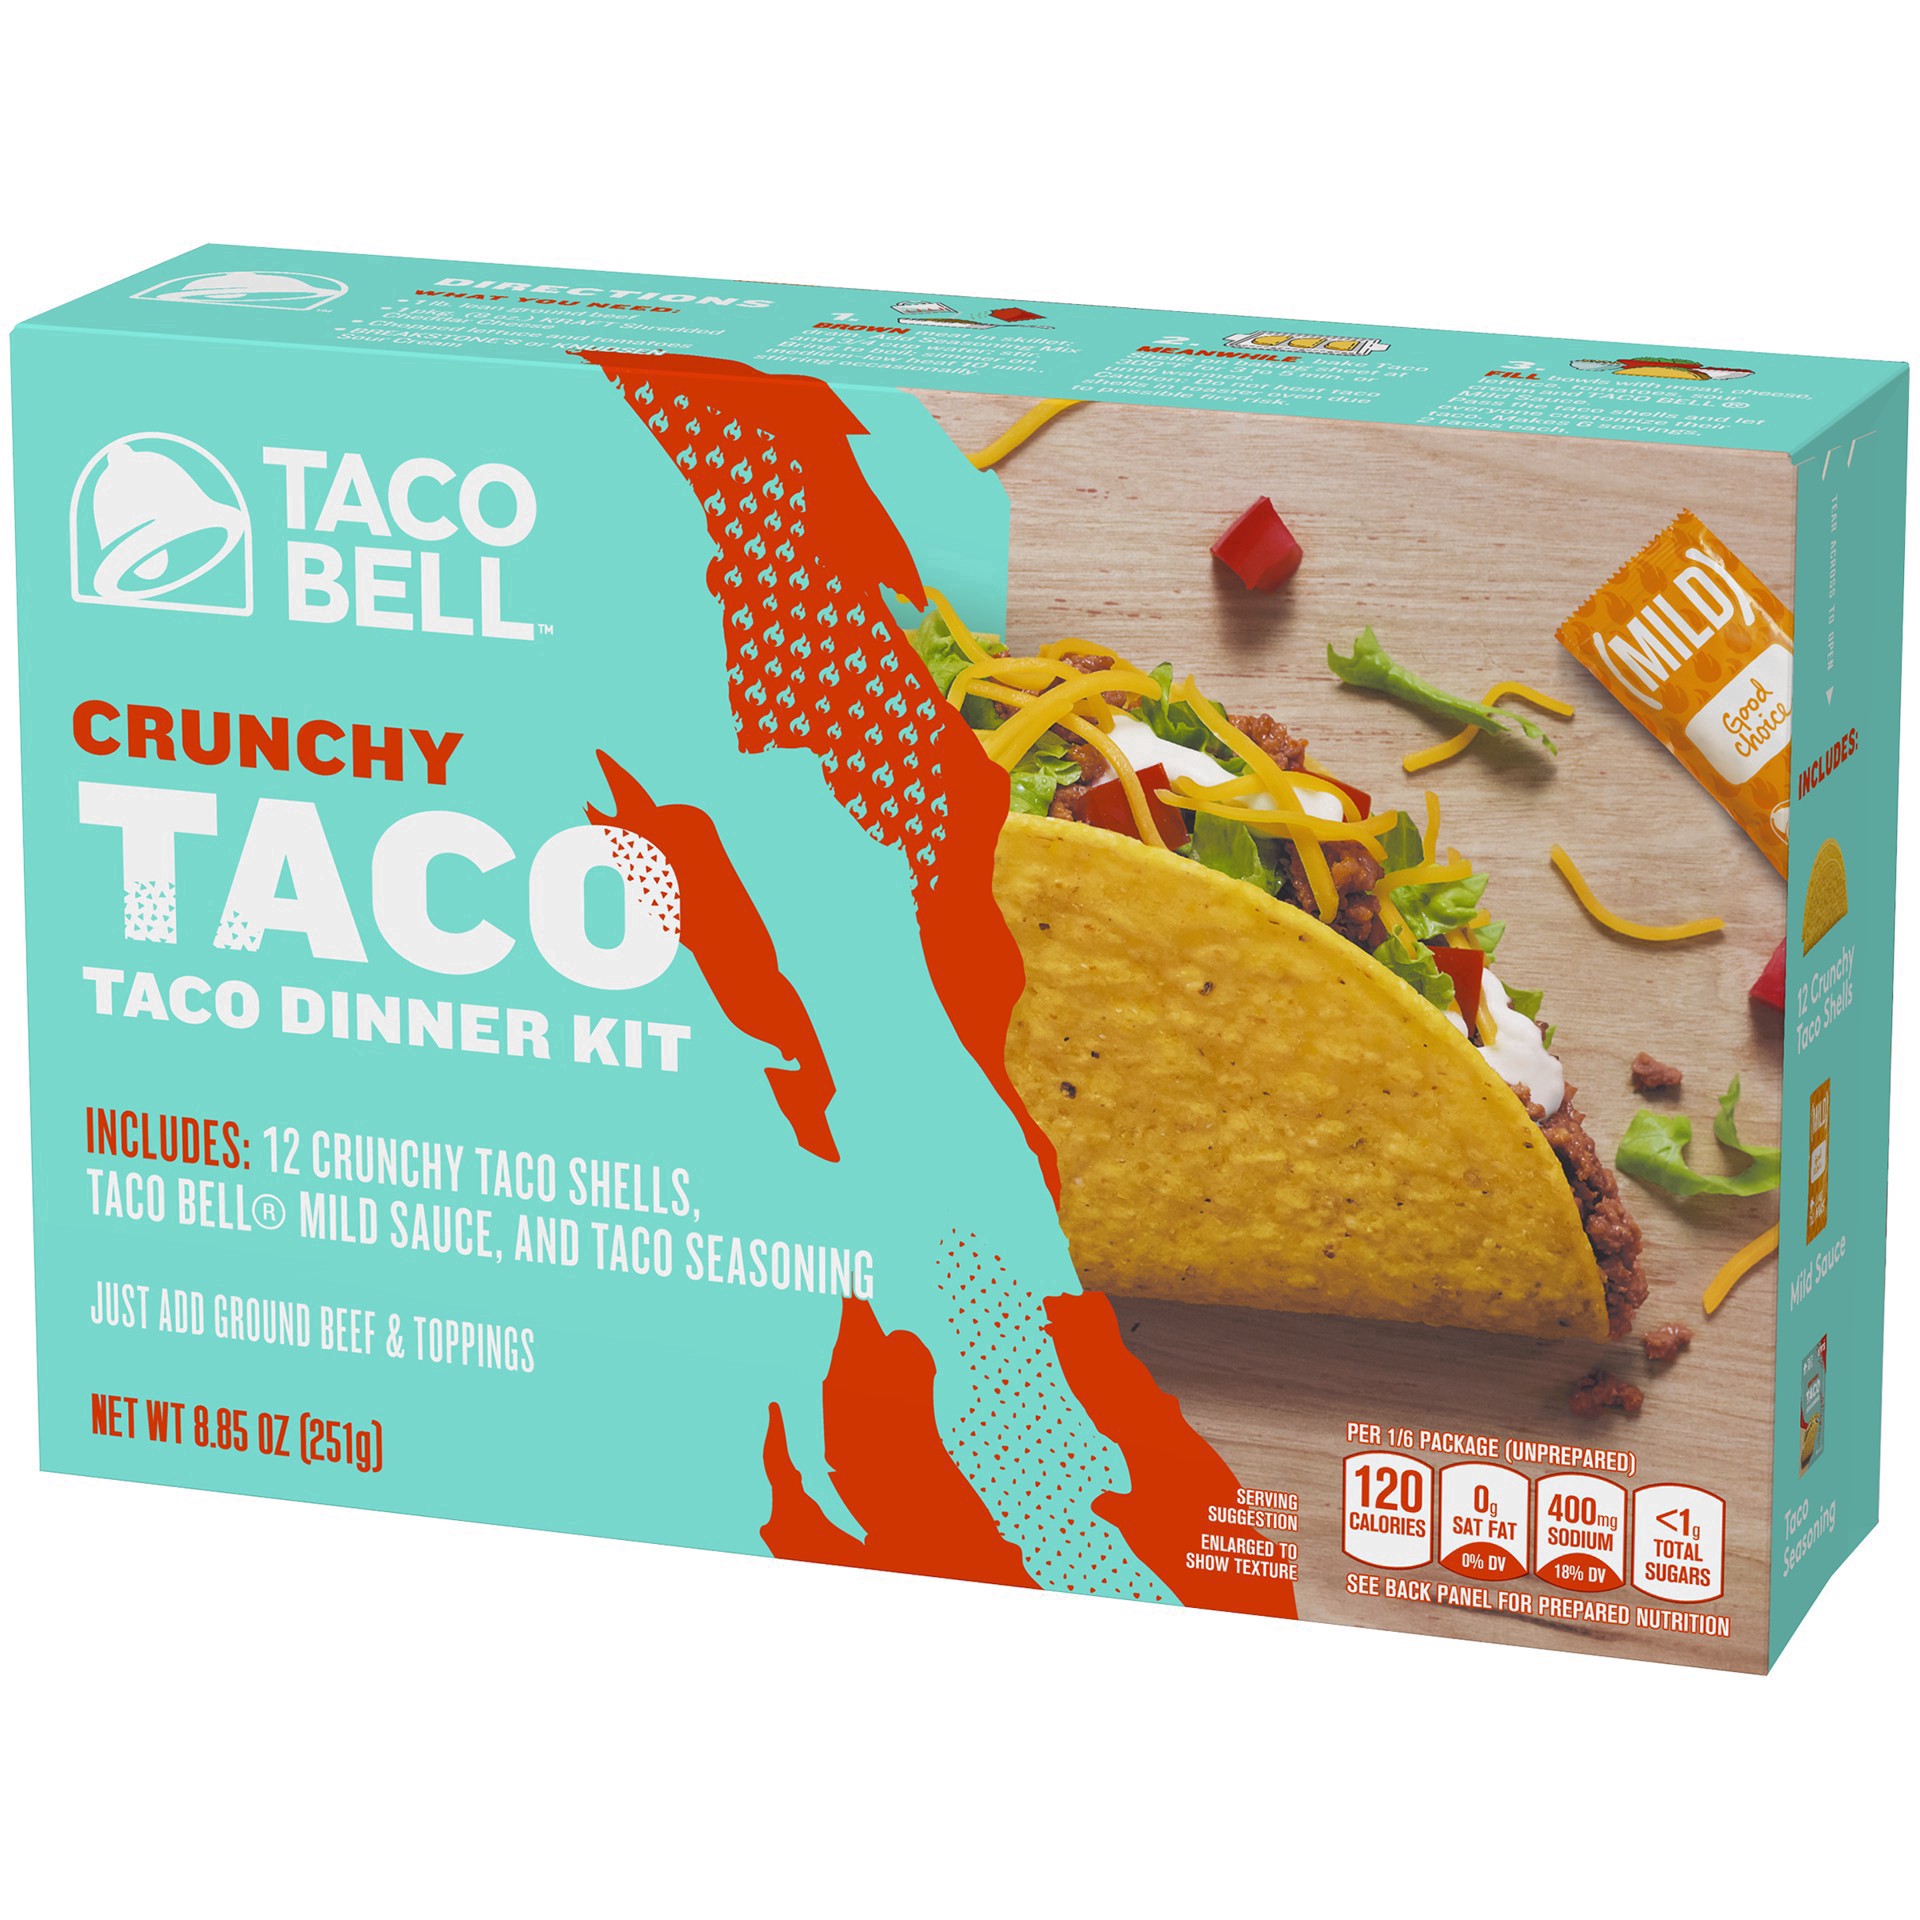 slide 82 of 91, Taco Bell Crunchy Taco Cravings Kit with 12 Crunchy Taco Shells, Taco Bell Mild Sauce & Seasoning, 8.85 oz Box, 1 ct